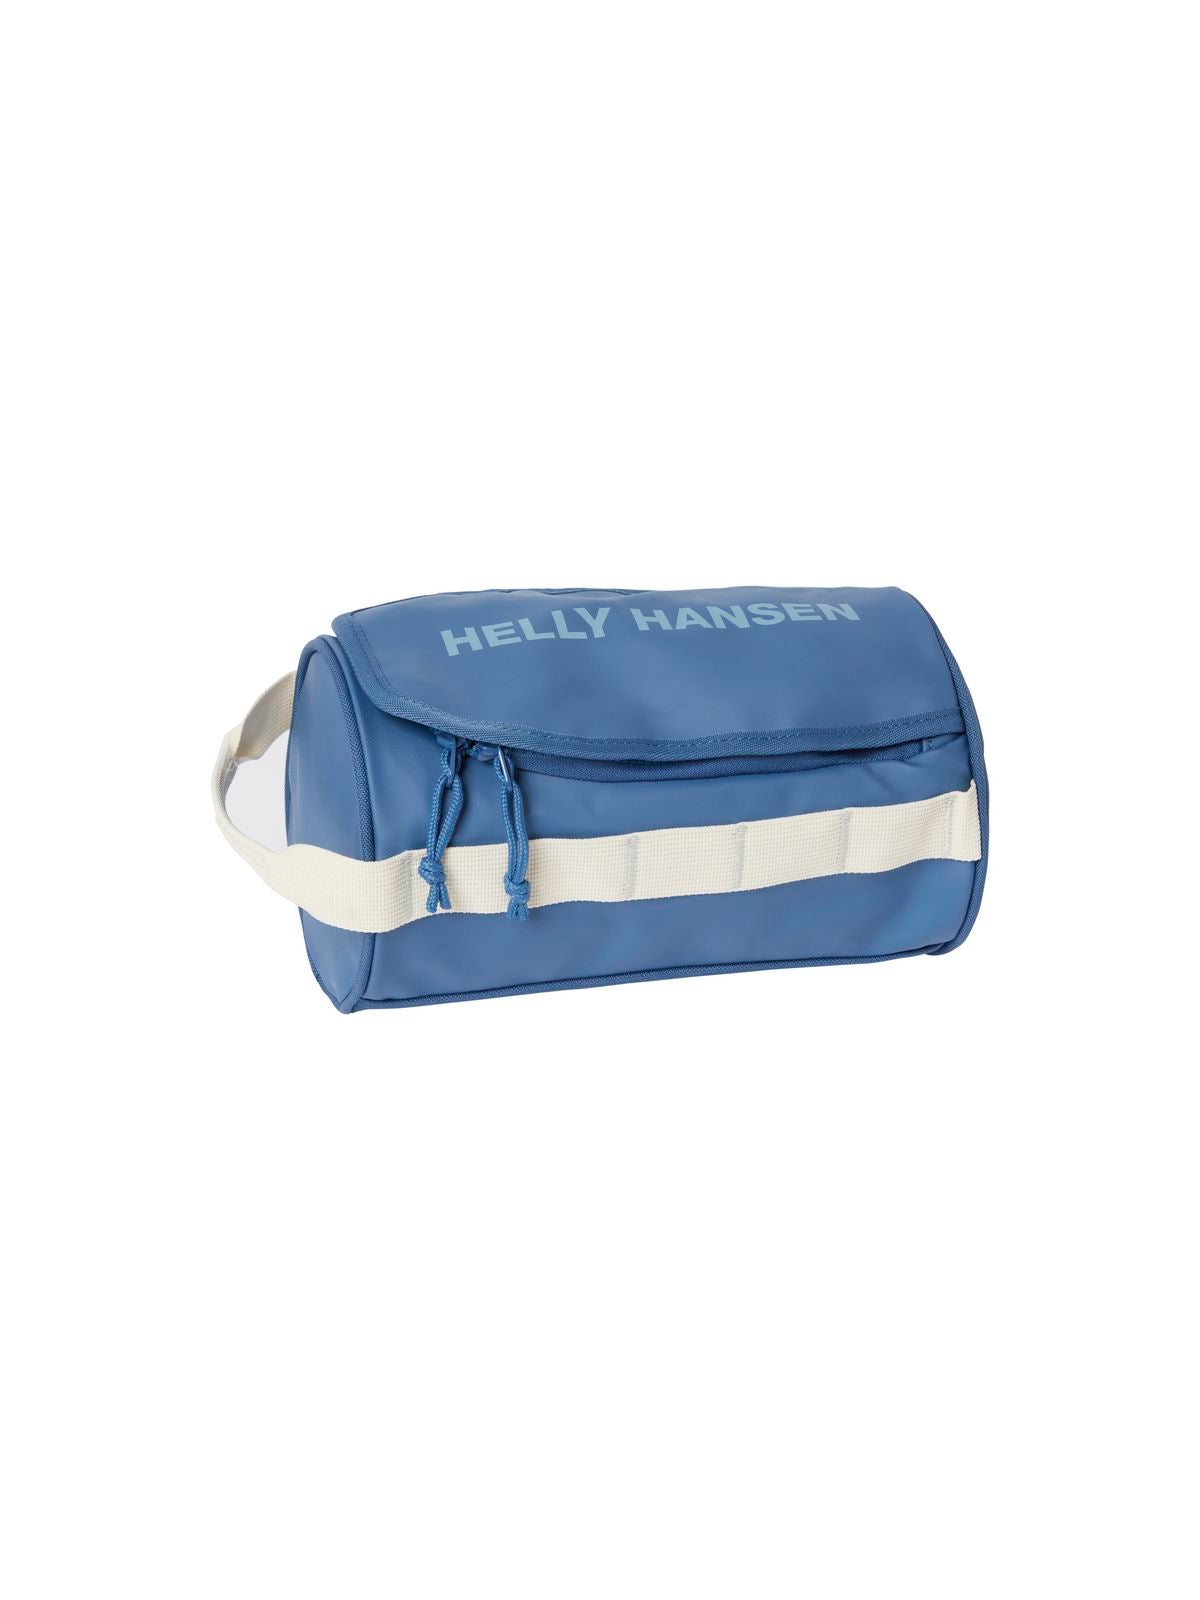 Kosmetyczka Helly Hansen Hh Wash Bag 2 - niebieski